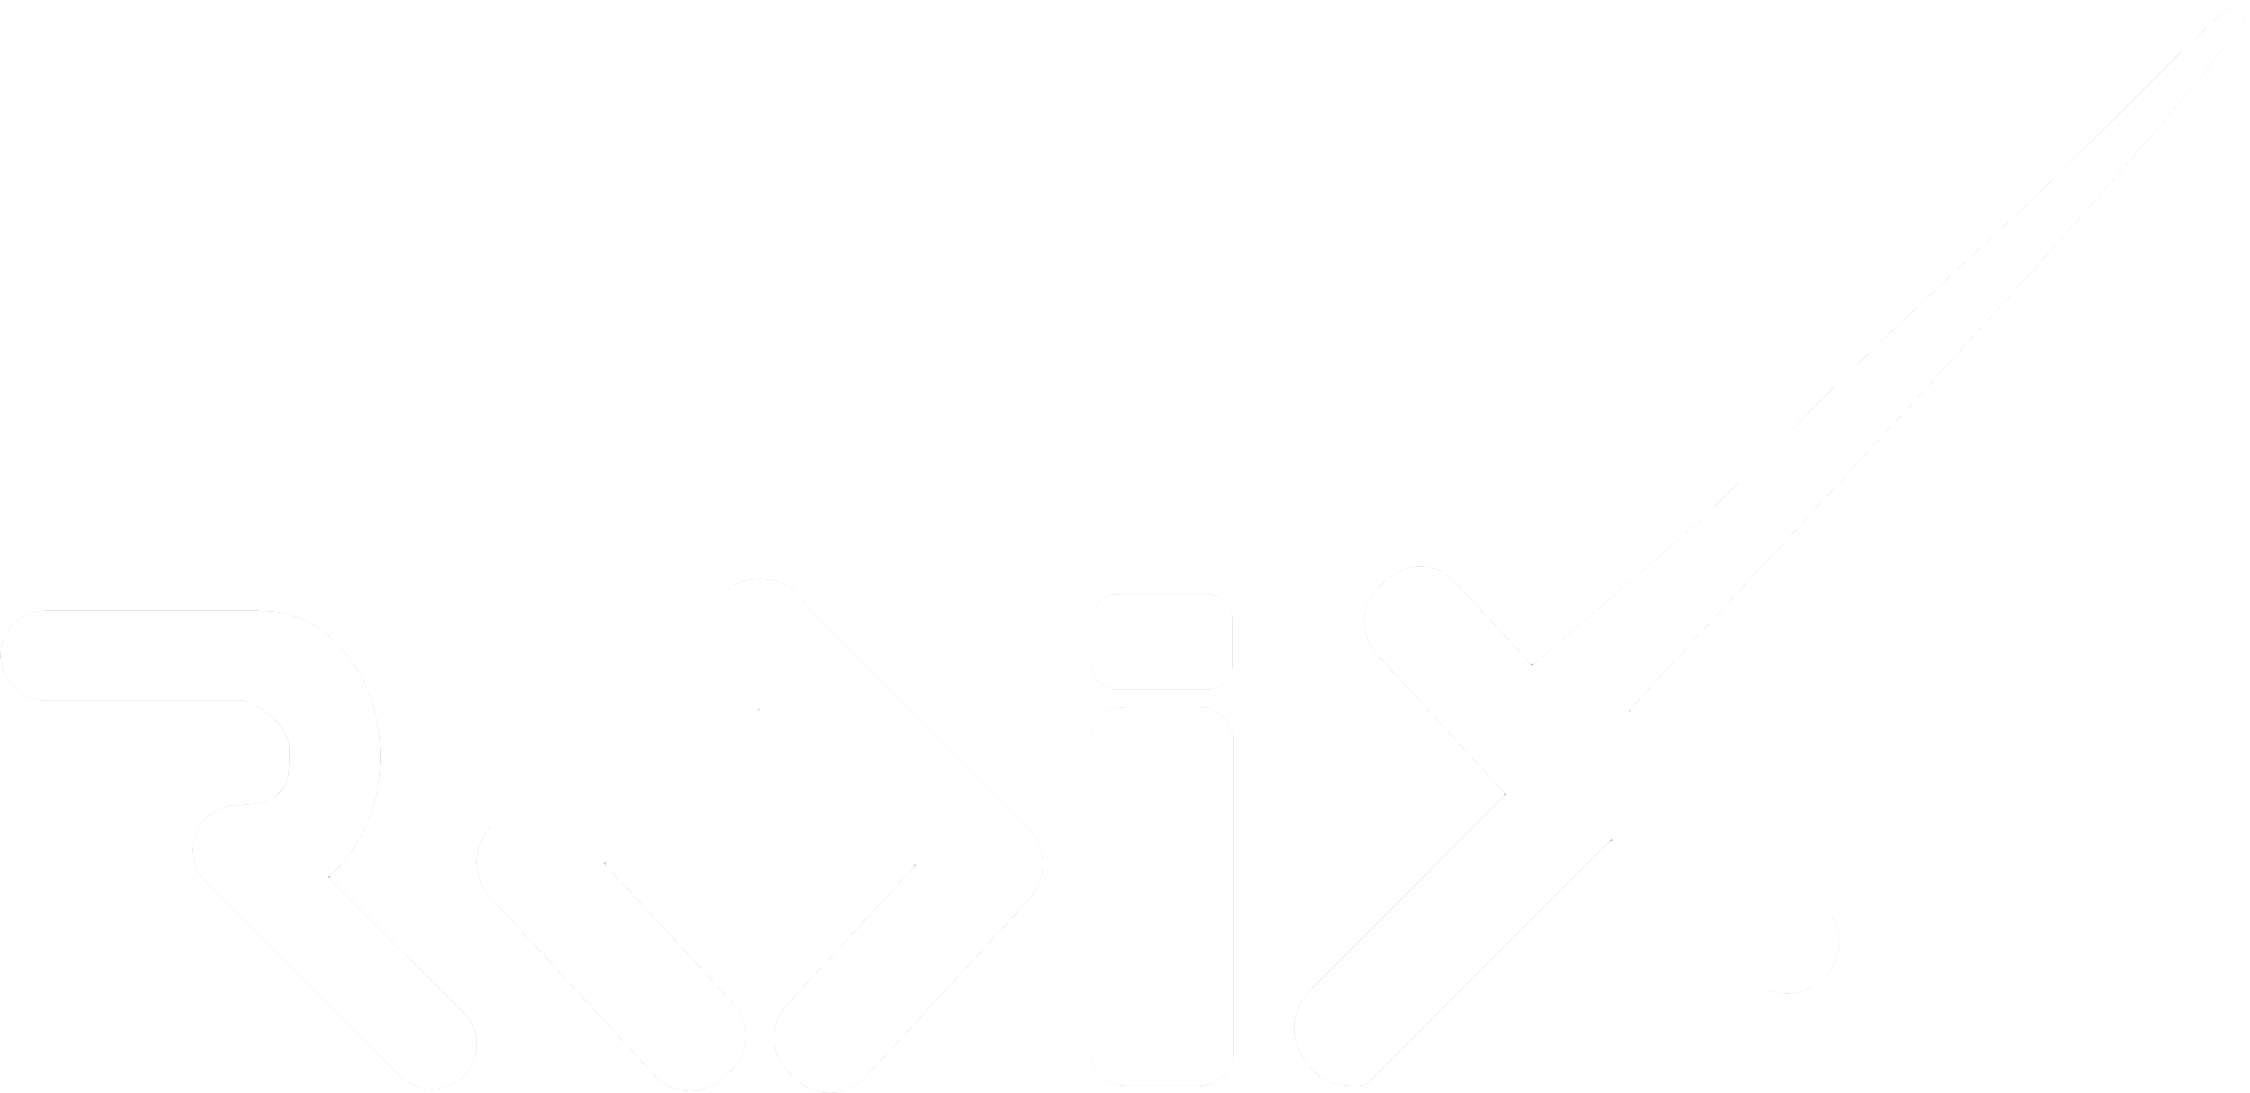 RoiX Digital Agency